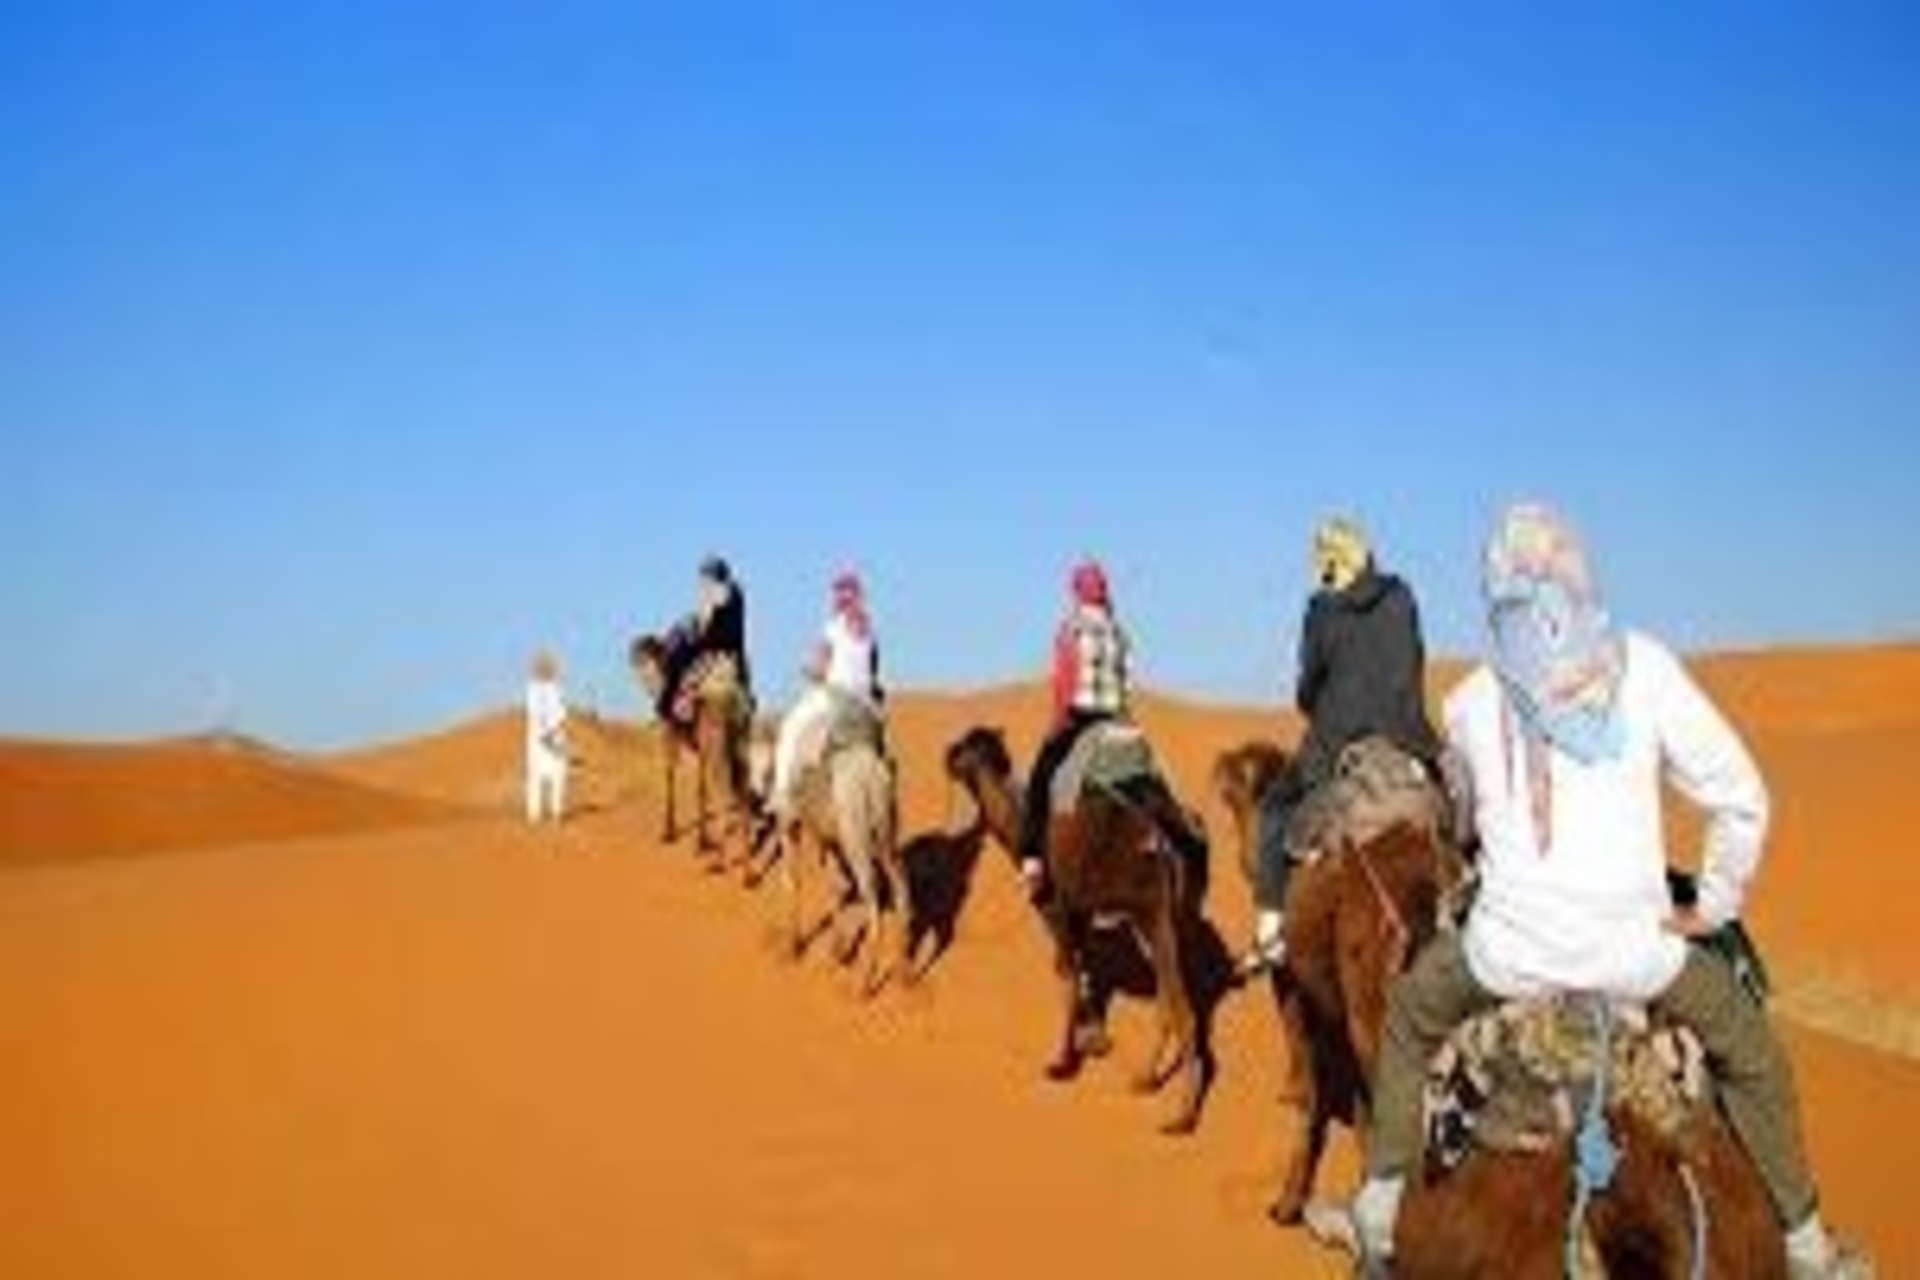 Small desert day trip from Agadir​